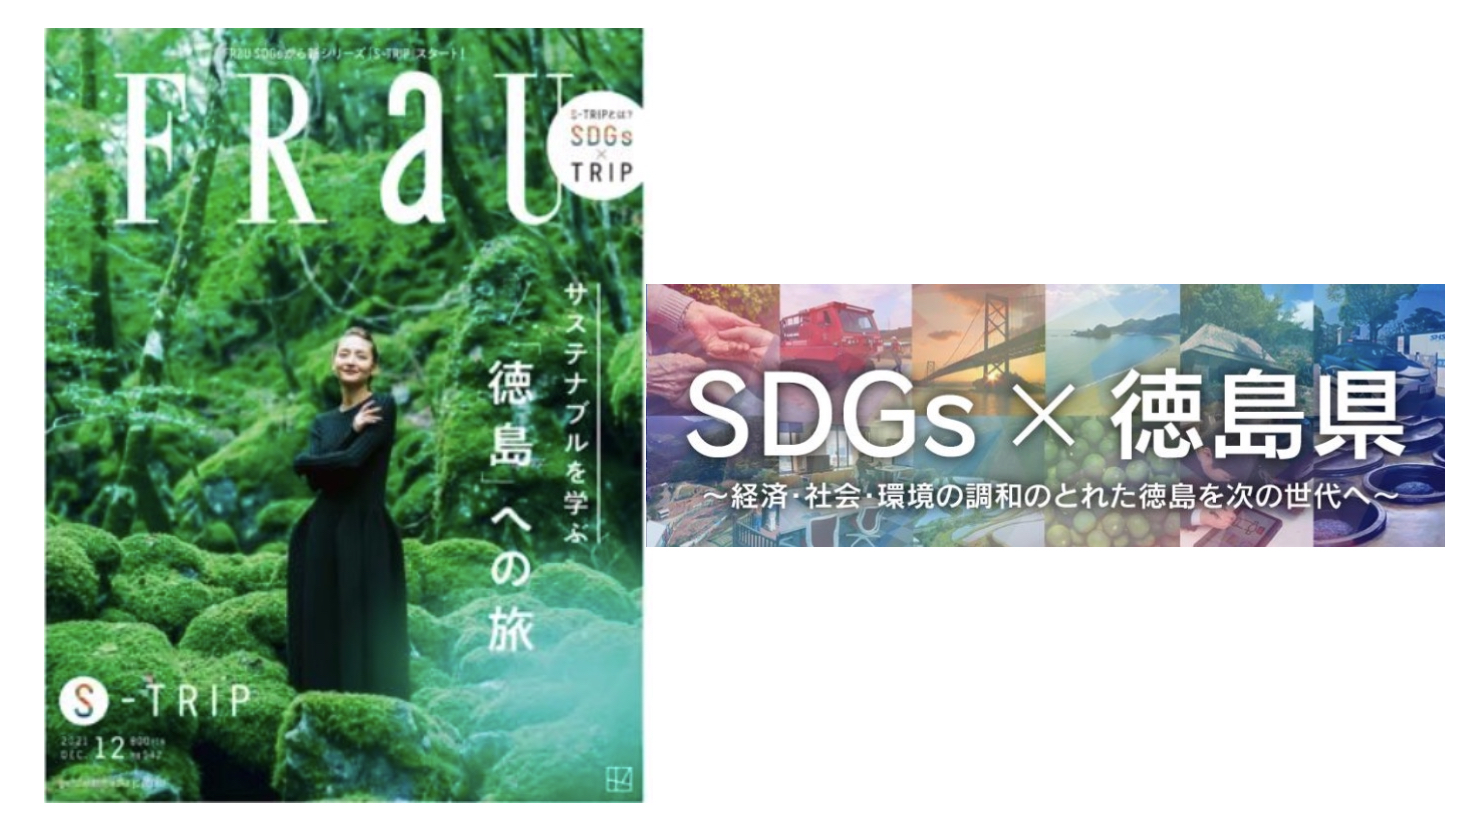 SDGs特集の新シリーズ「S-TRIP」第1弾「徳島県」が、地域を巻き込んで大きな話題に！│徳島県に所縁のある企業・団体の協賛の基に刊行